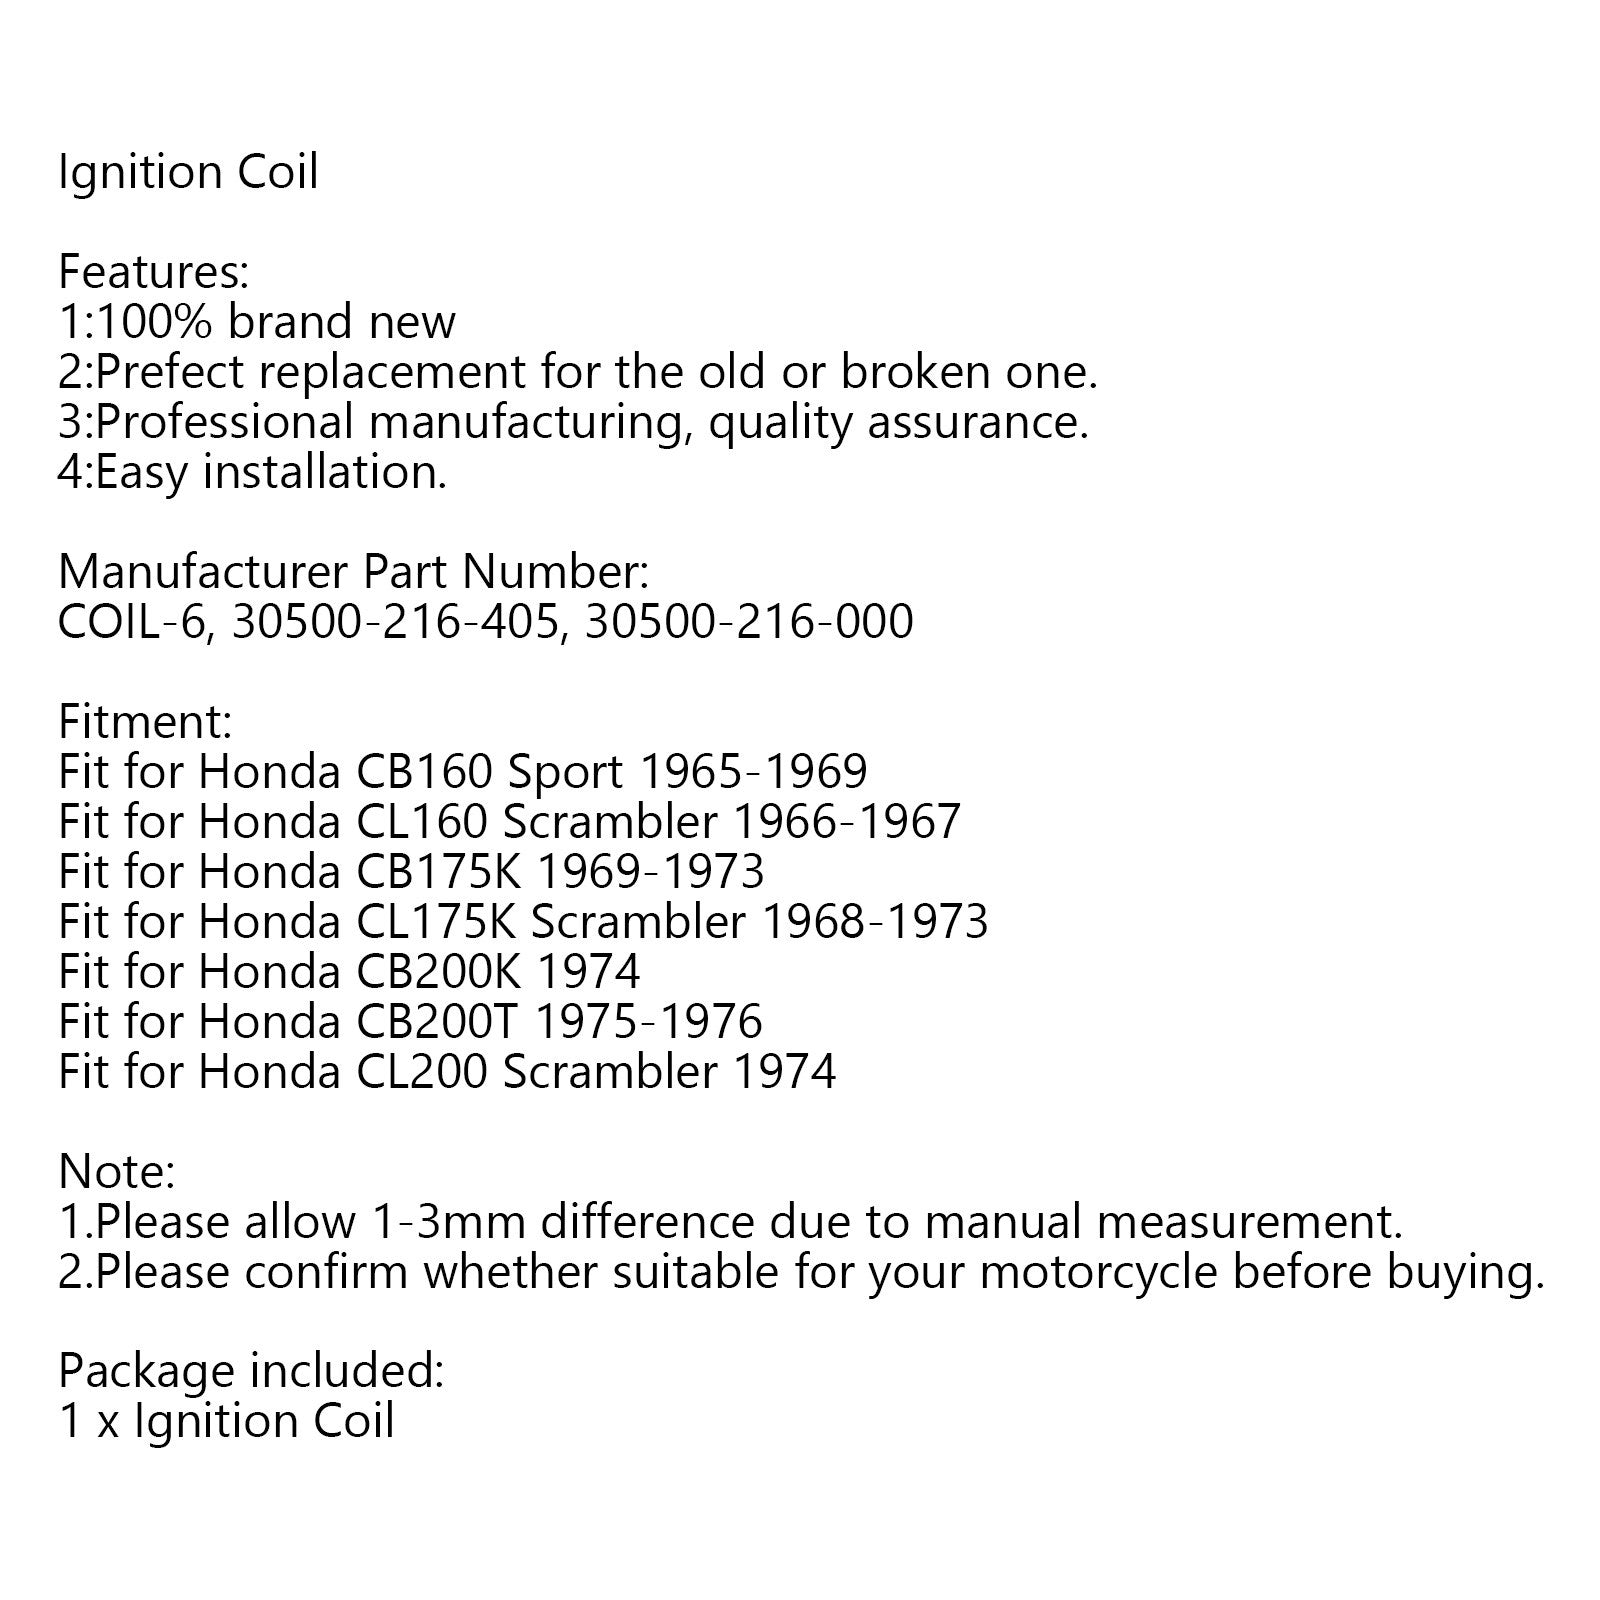 Ignition Coil Models fit for Honda CB160 CL160 CL175 CL200 CB200 30500-216-000